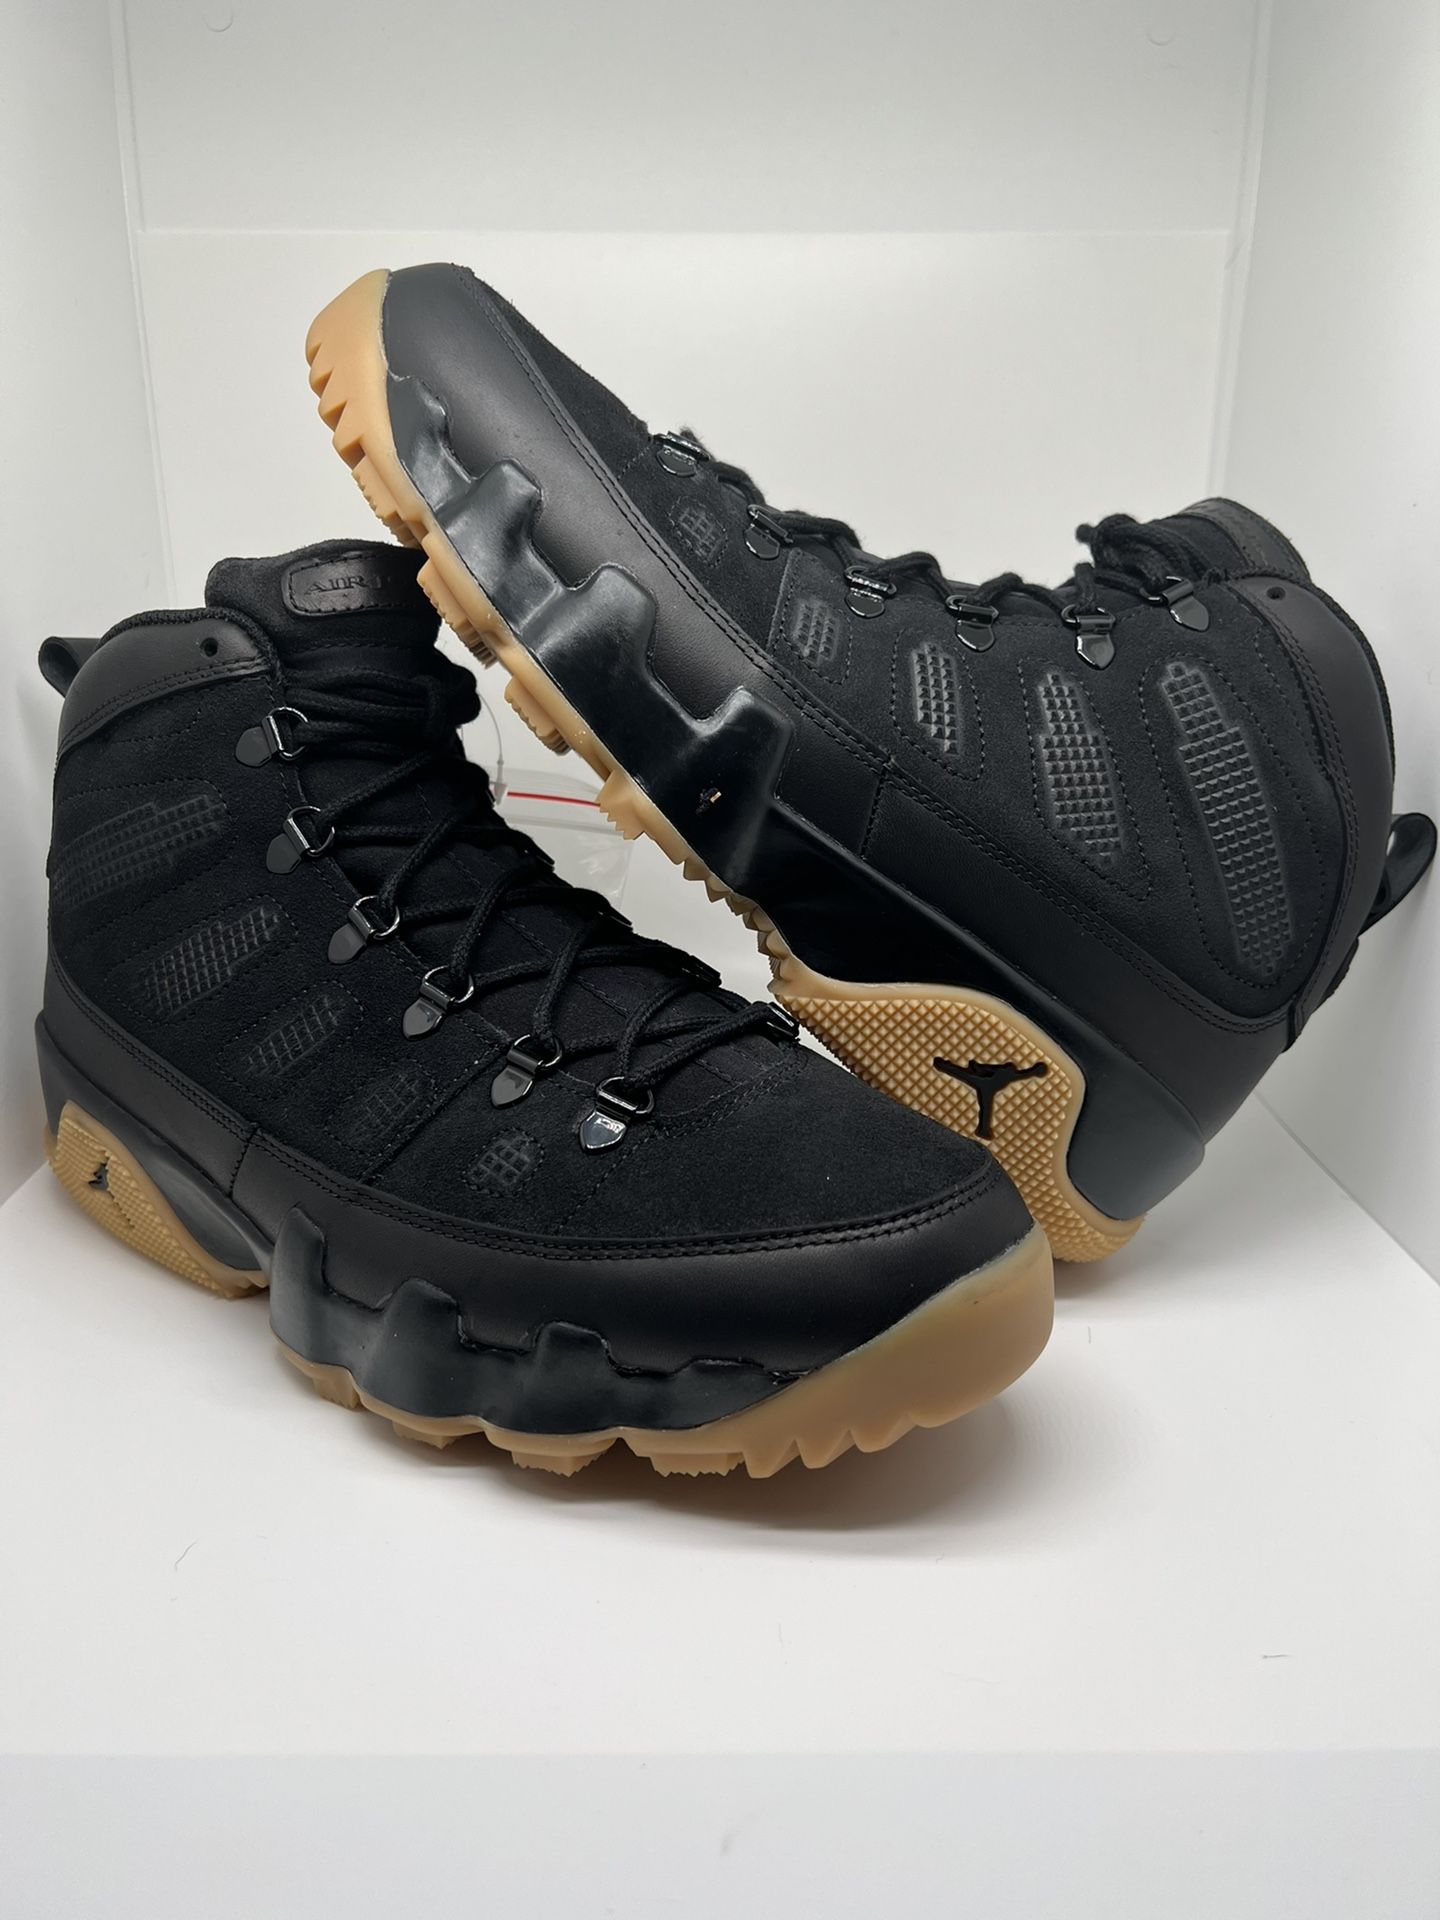 Jordan 9 Retro Boot NRG Black Gum Size 10.5